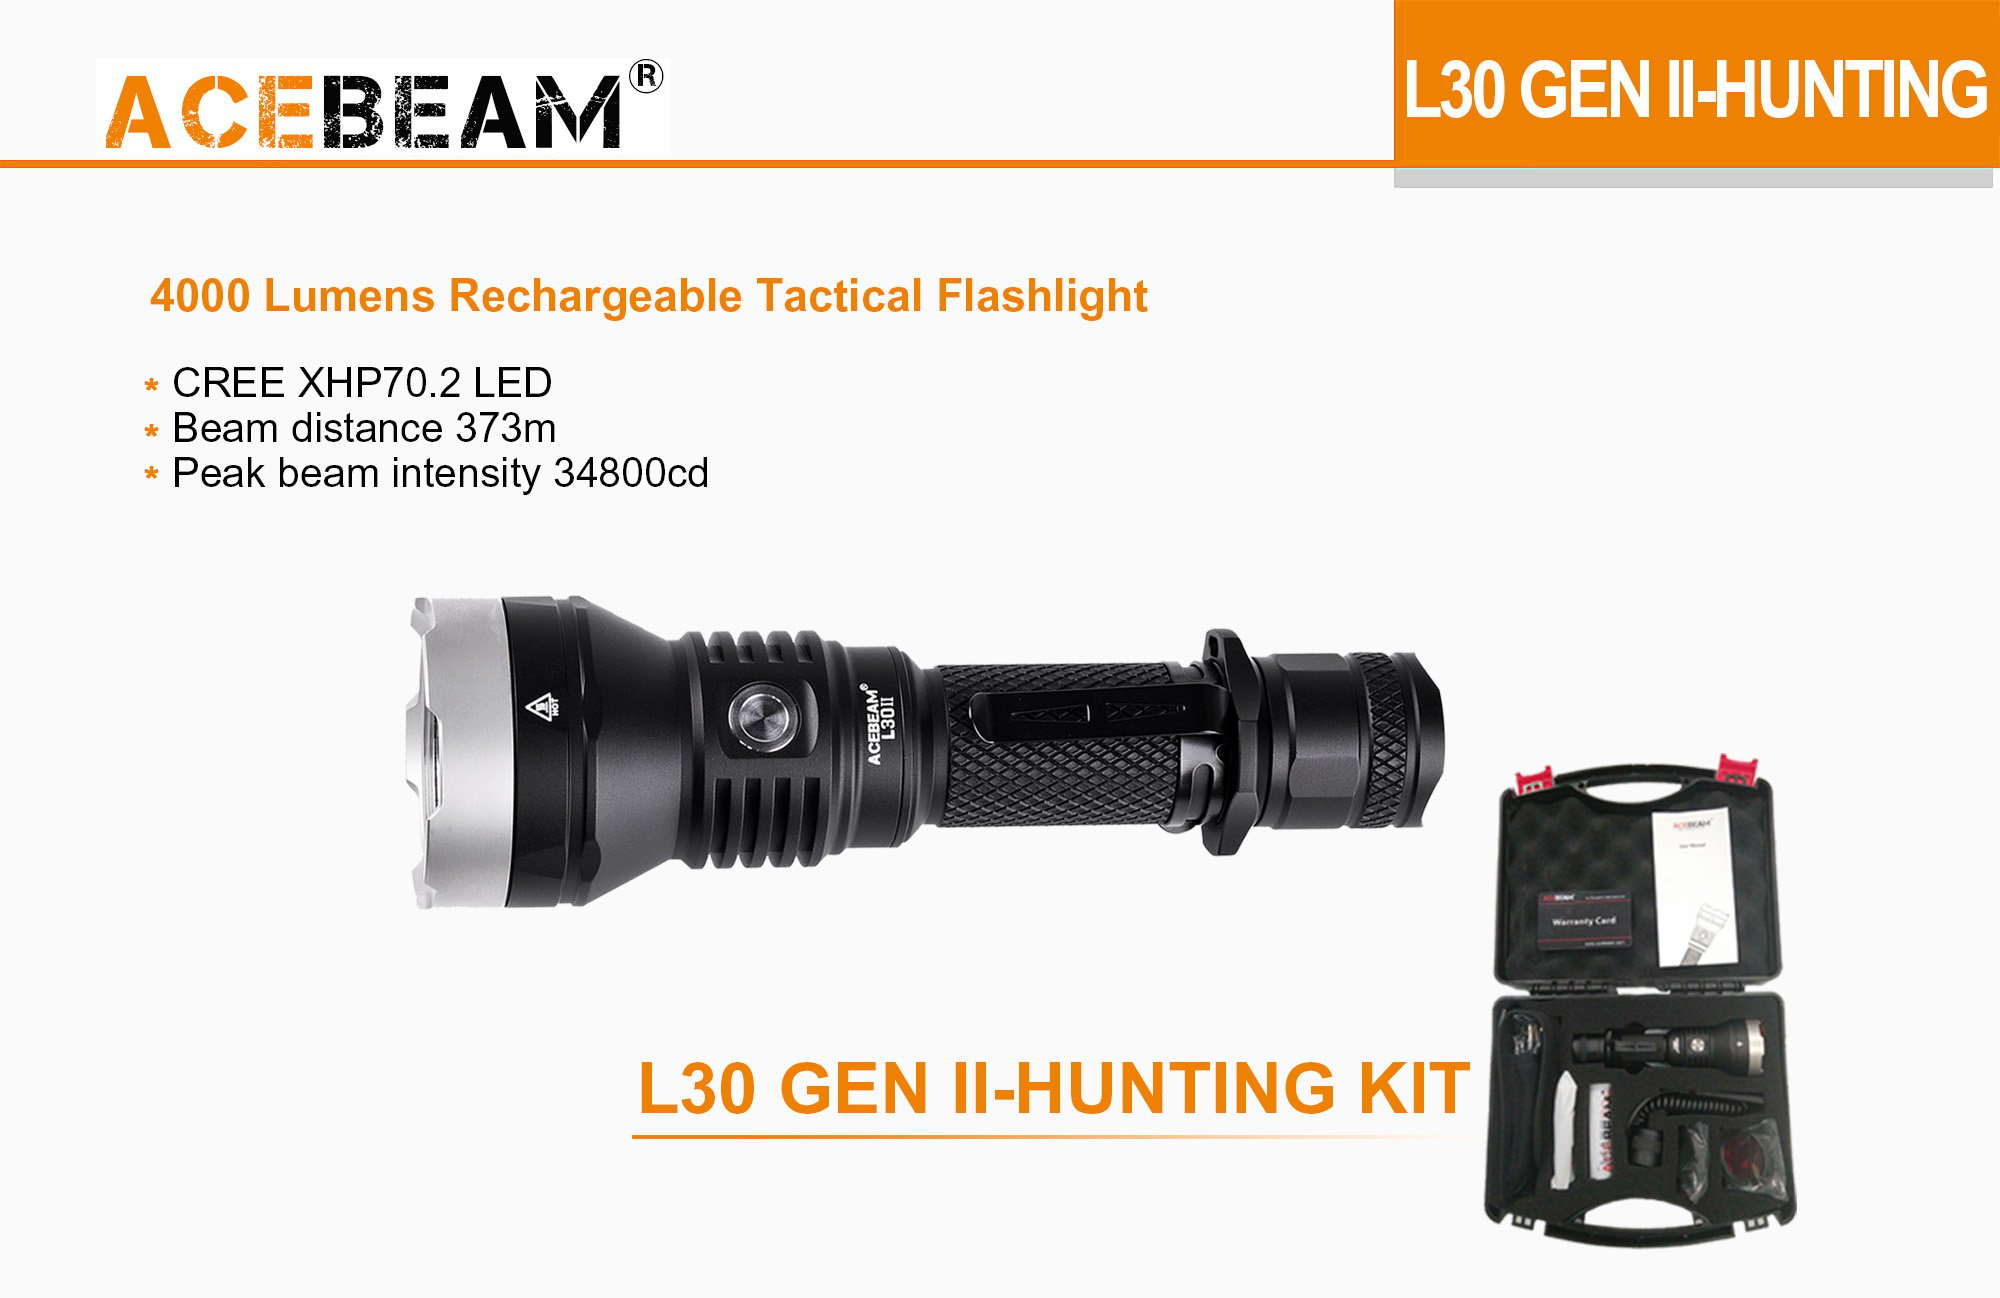 ACEBEAM L30 Gen II - Lampe Torche Tactique Rechargeable 4000 lumens